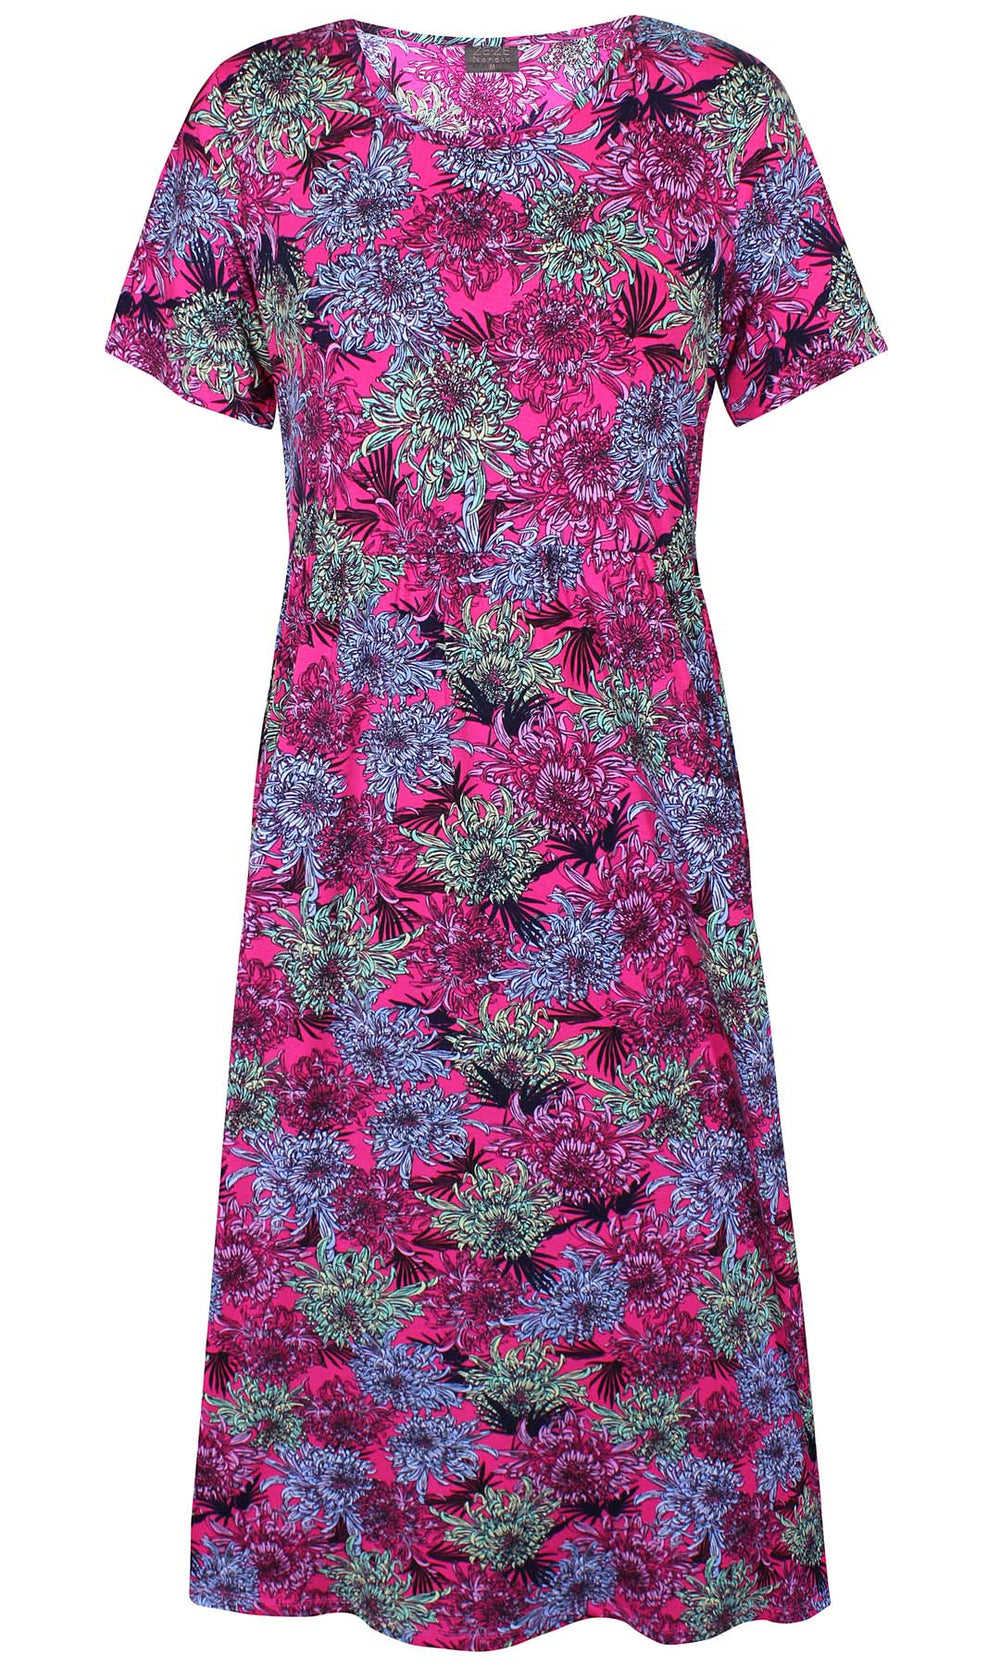 Fia 200: Intense Pink Dress with Vibrant Floral Print - Timeless Design with Elegant Finish| ZE-ZE